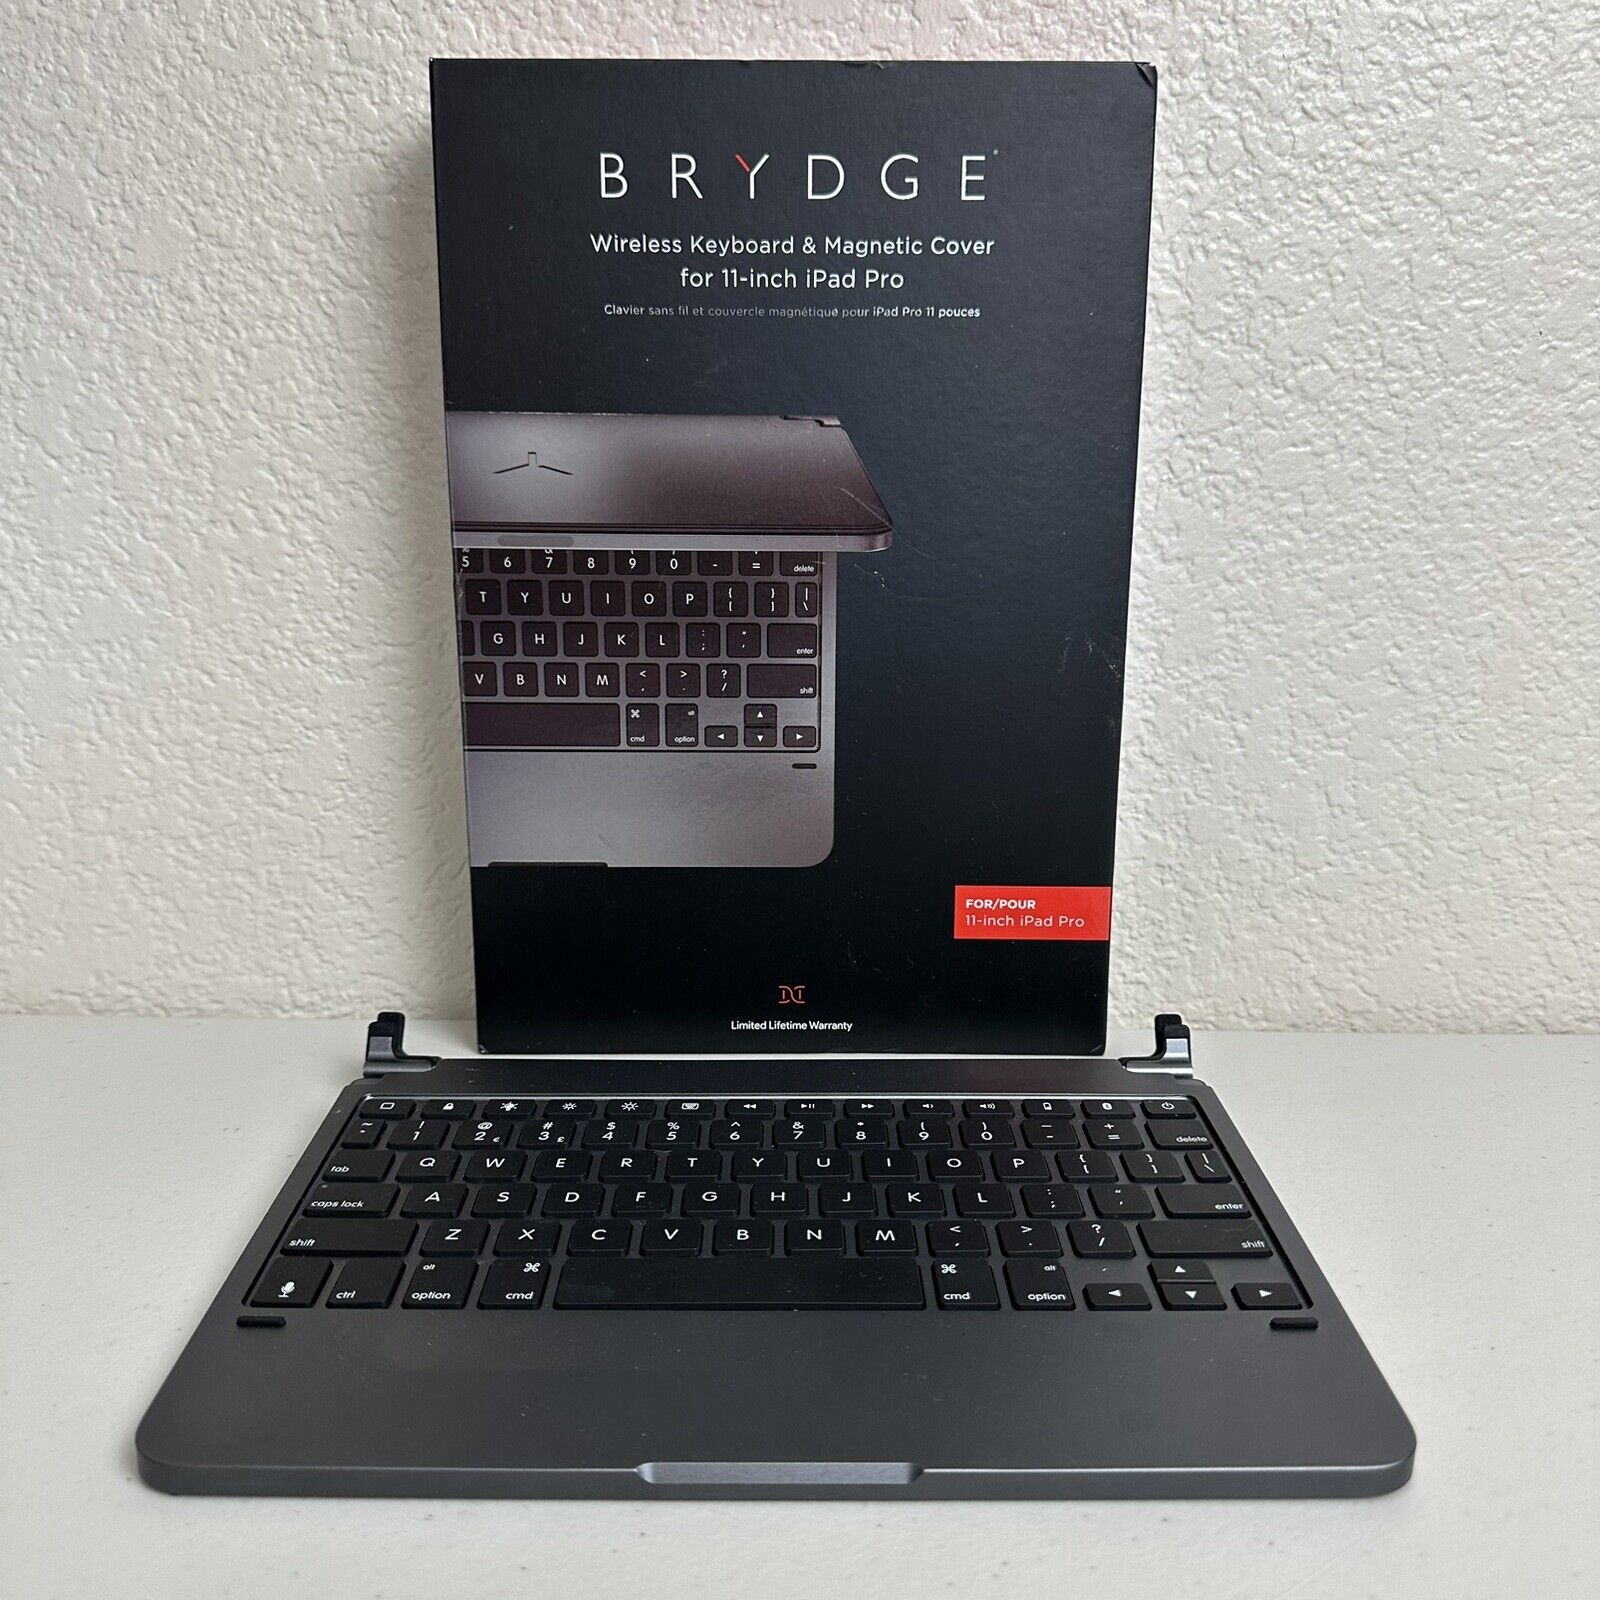 Bluetooth Wireless Keyboard for iPad Pro 11 inch Brydge BRY4012 2018 Space Gray